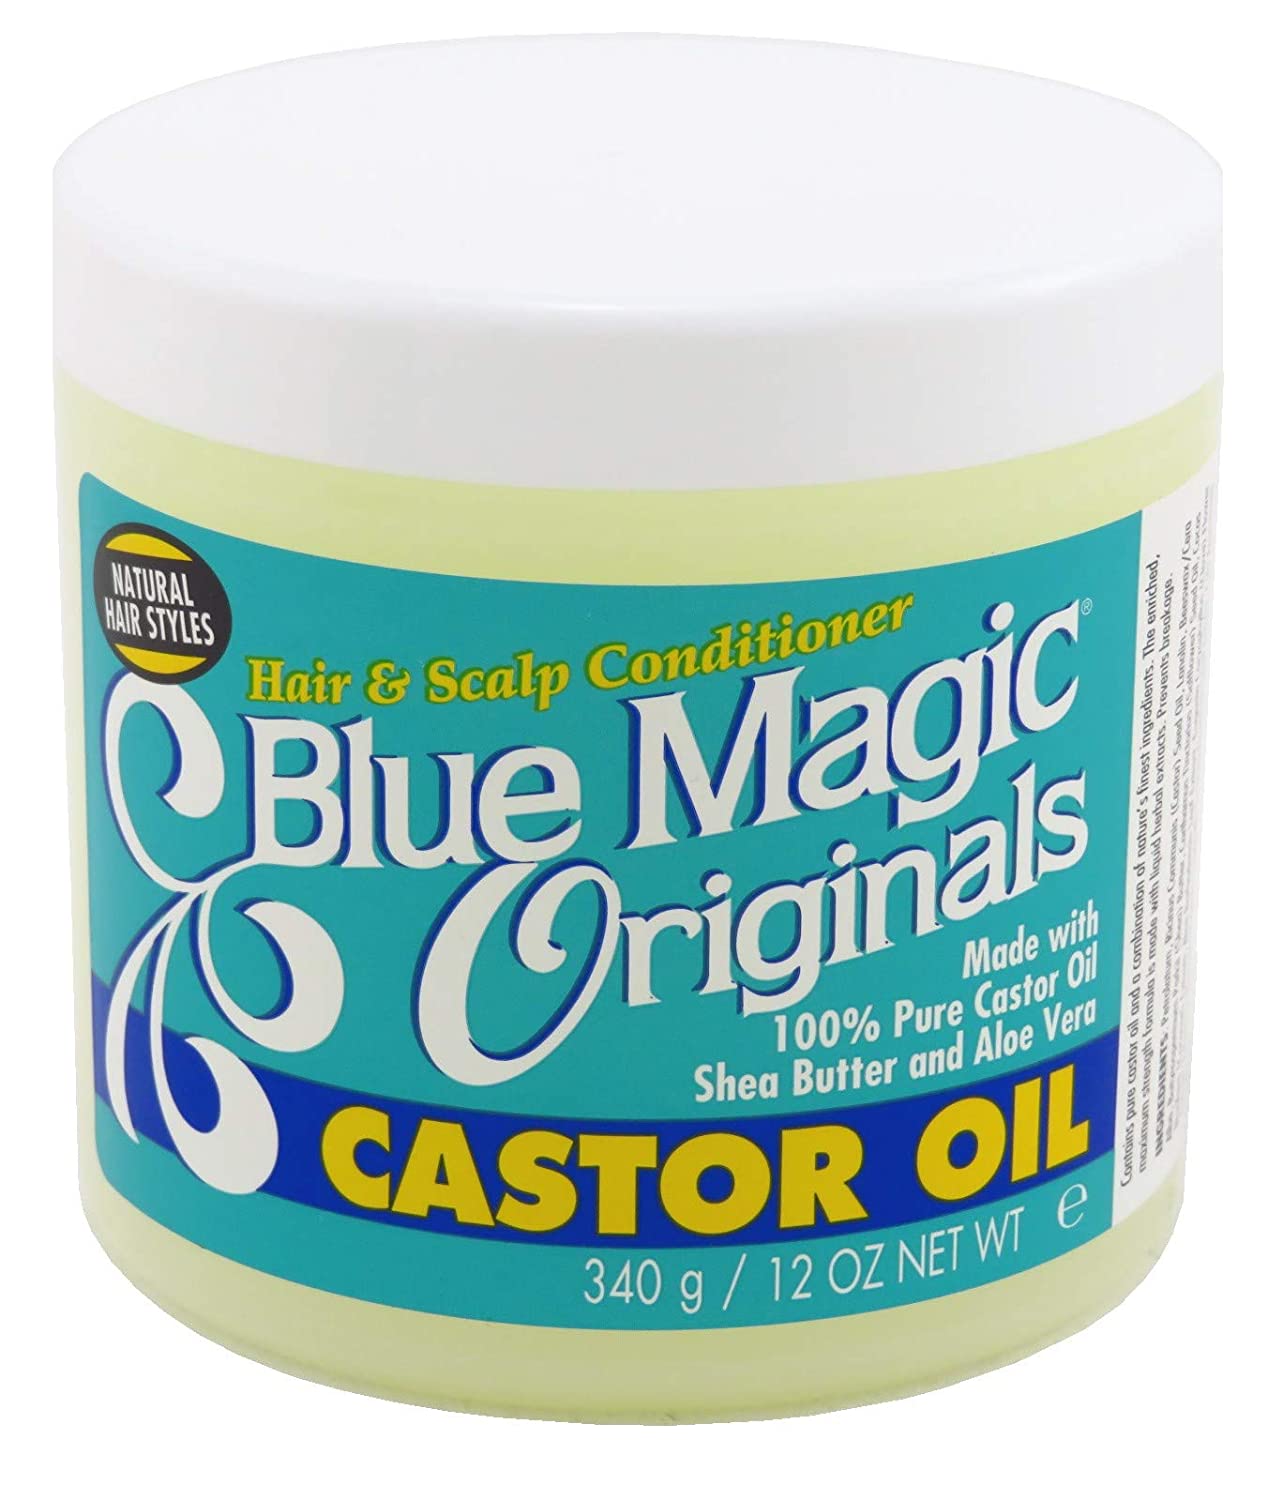 Blue Magic Originals Castor Oil/12 oz